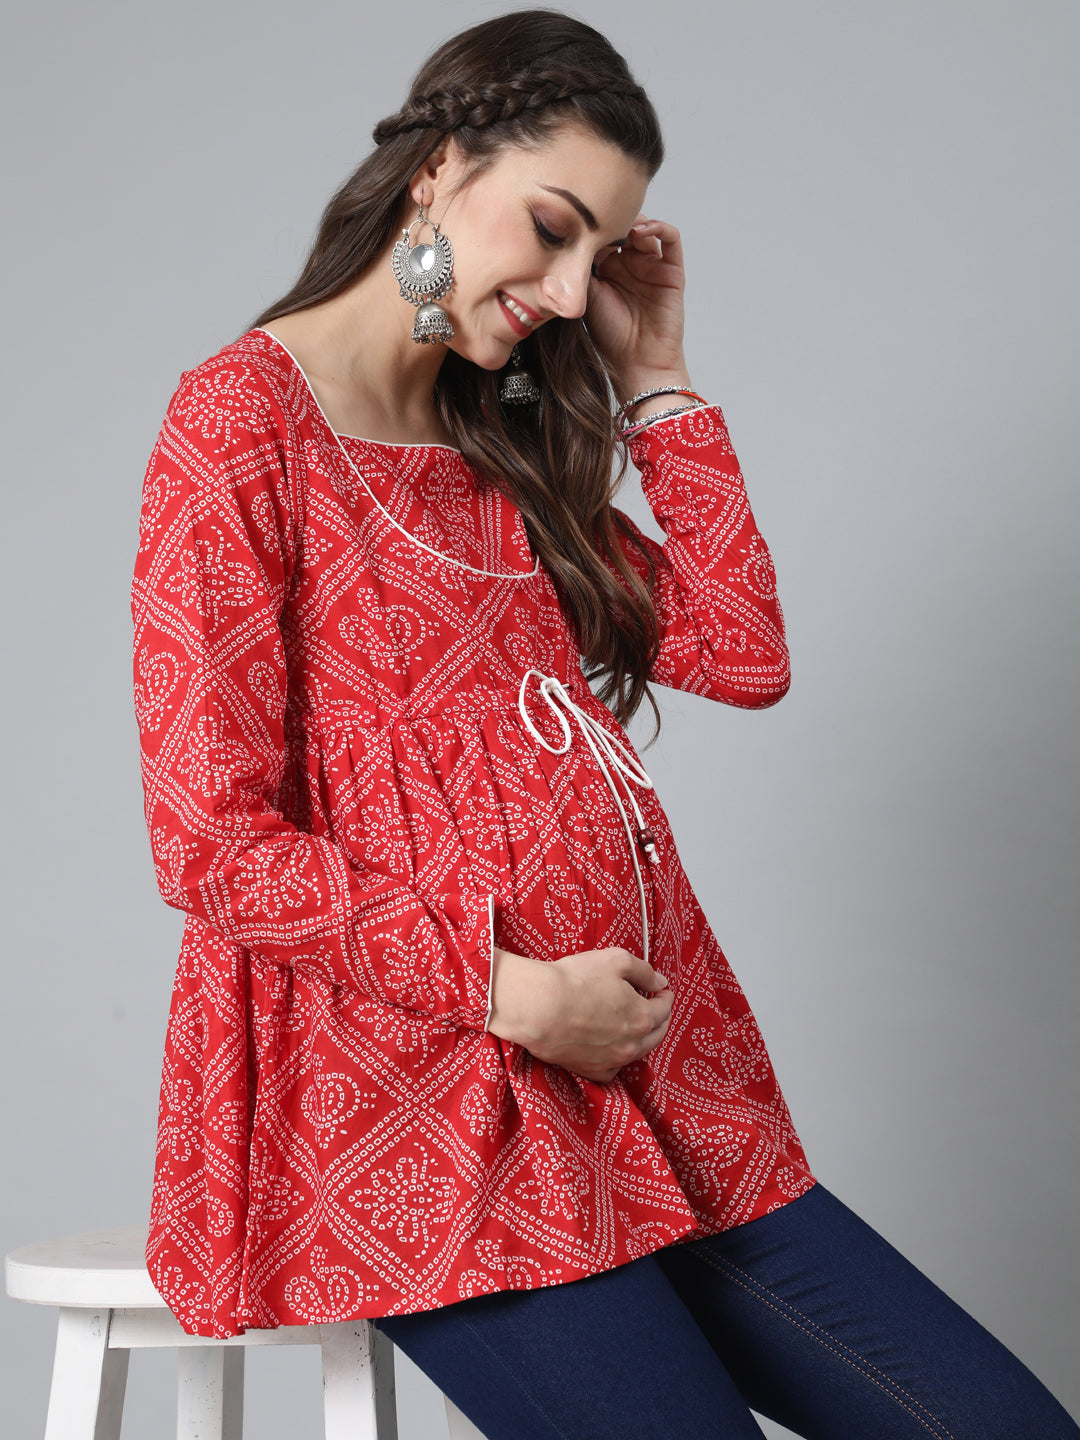 Red Bandhani Print Maternity Tunic